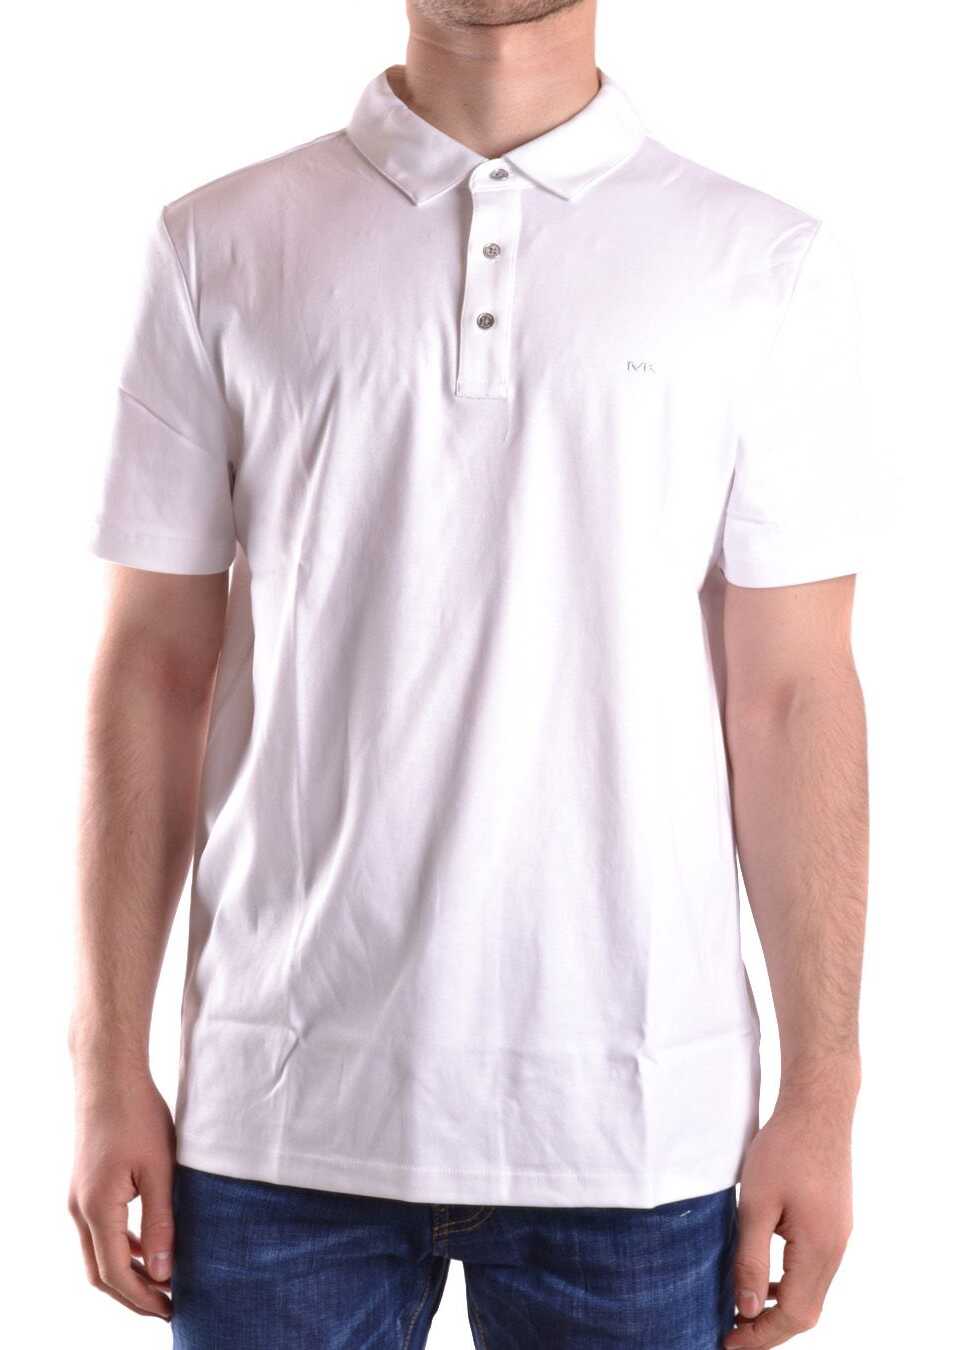 Michael Kors Cotton Polo Shirt WHITE